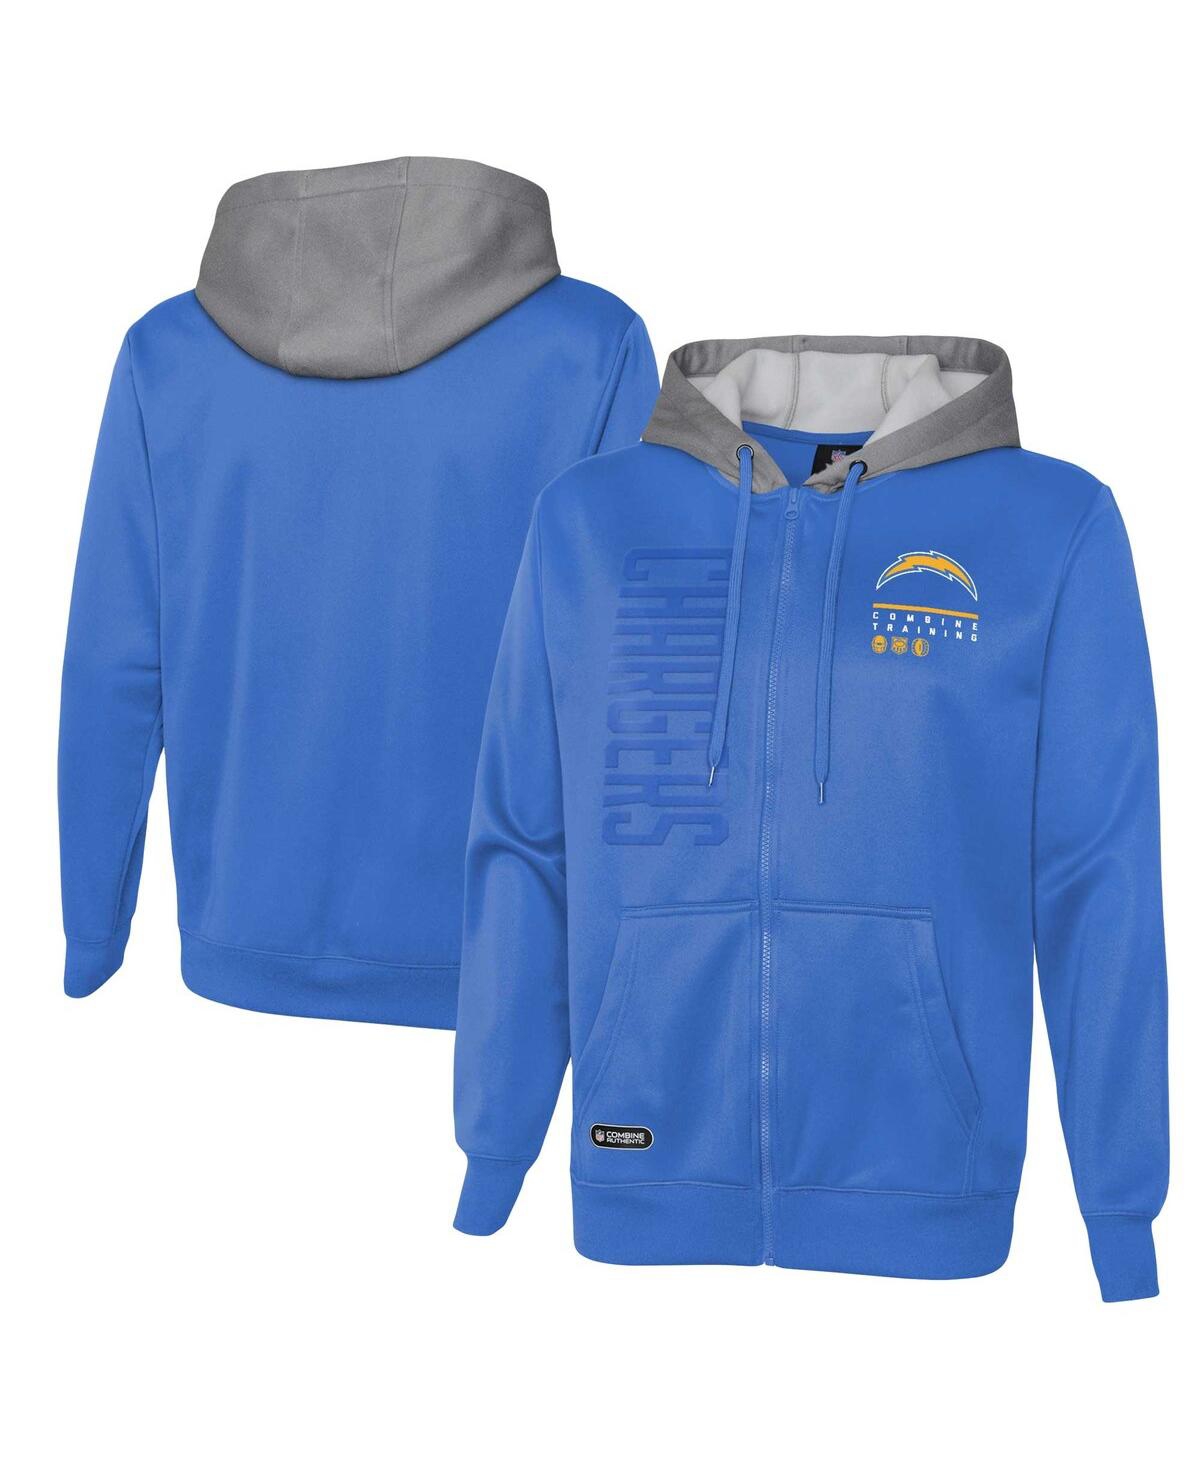 Shop Outerstuff Men's Powder Blue Los Angeles Chargers Combine Authentic Field Play Full-zip Hoodie Sweatshirt